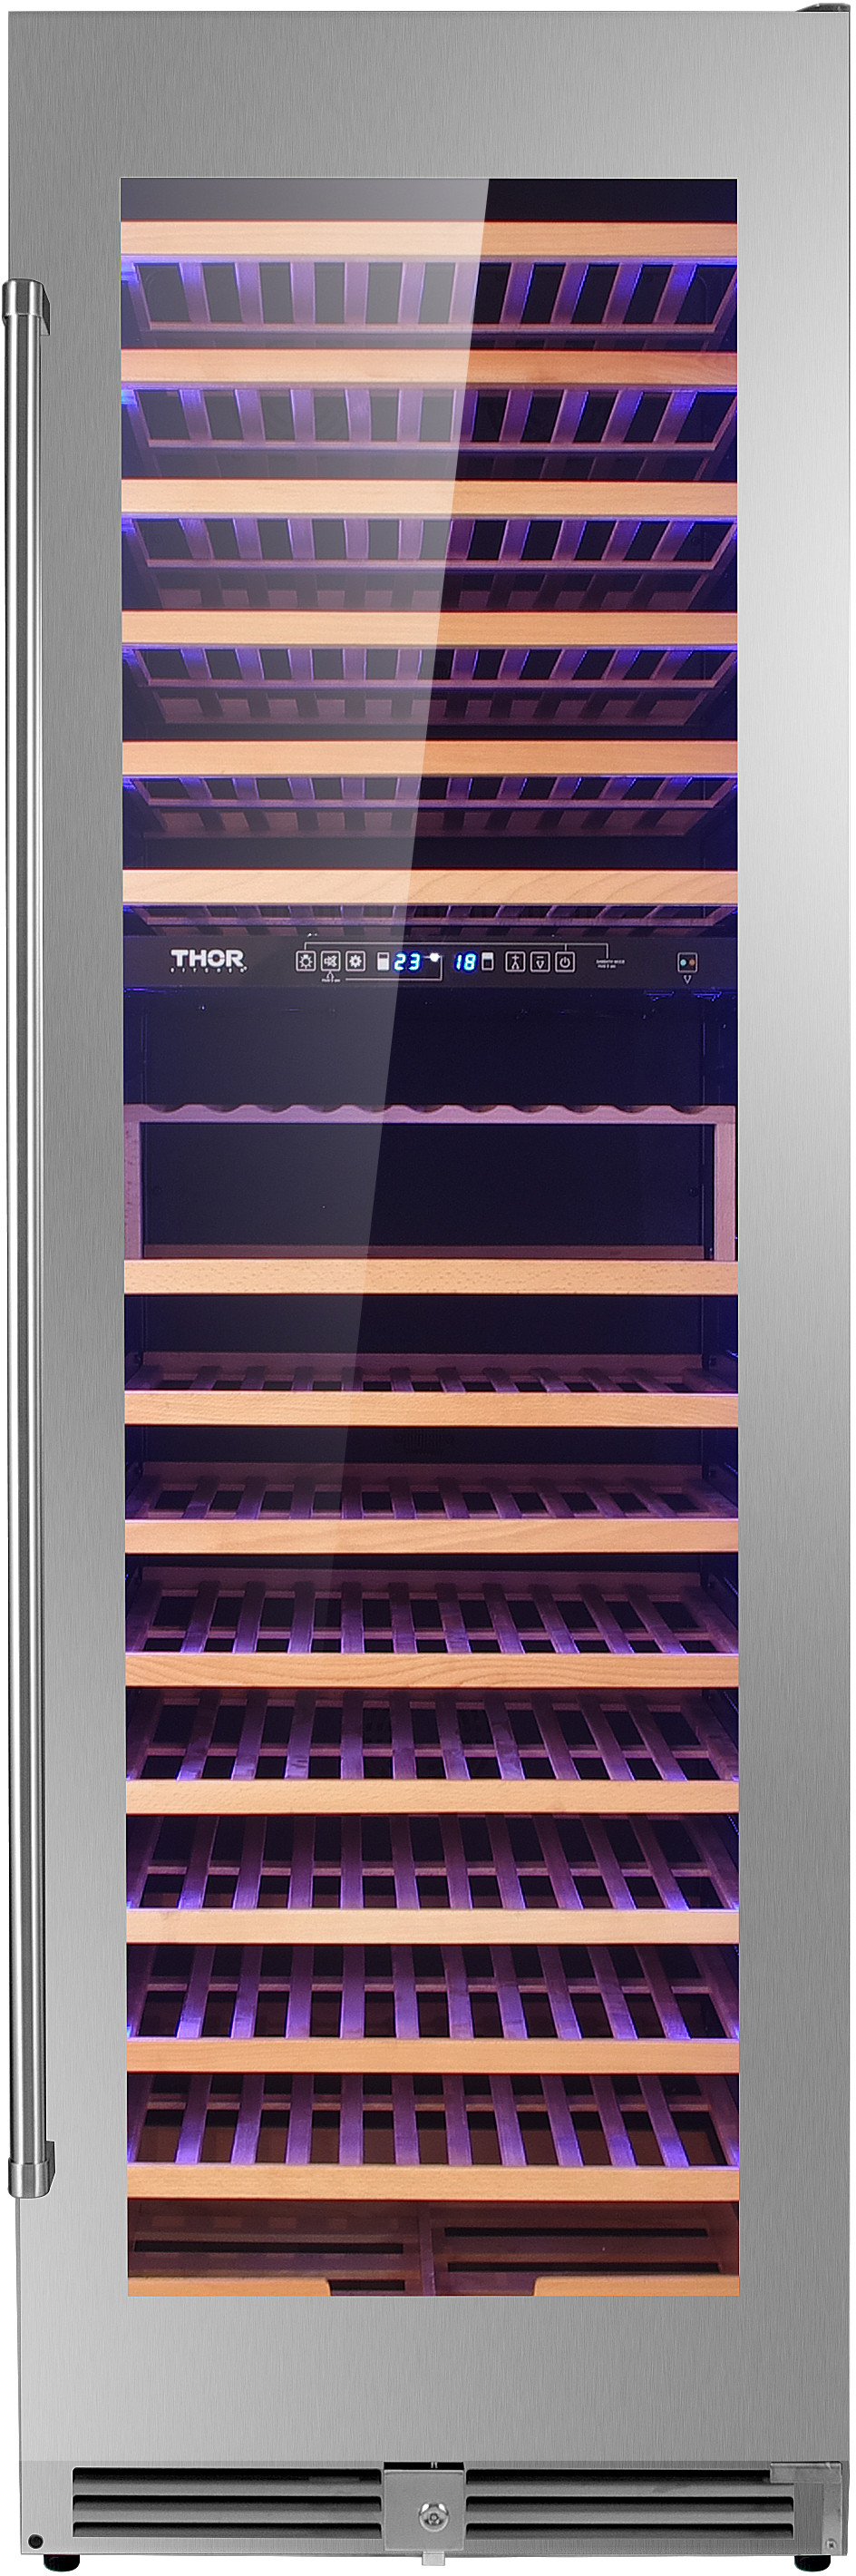 24"" Wine Cooler - Thor Kitchen TWC2403DI